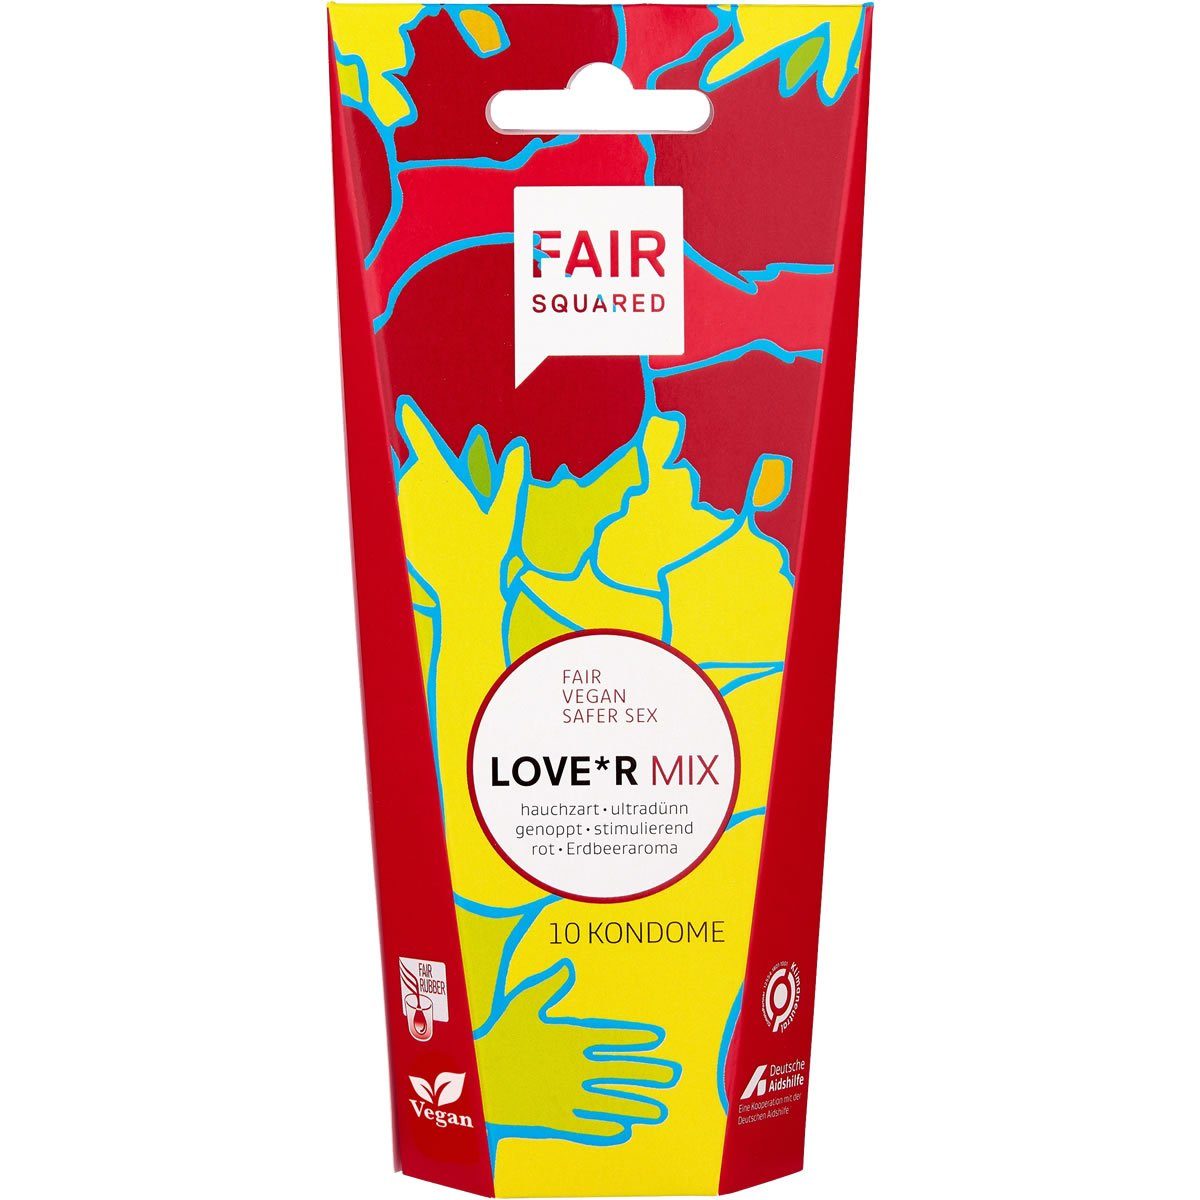 Fair Mix Love*r mit, Kondome Love Squared Packung im your Sortiment 10 vegane St., Celebrate Fair-Trade-Kondome -